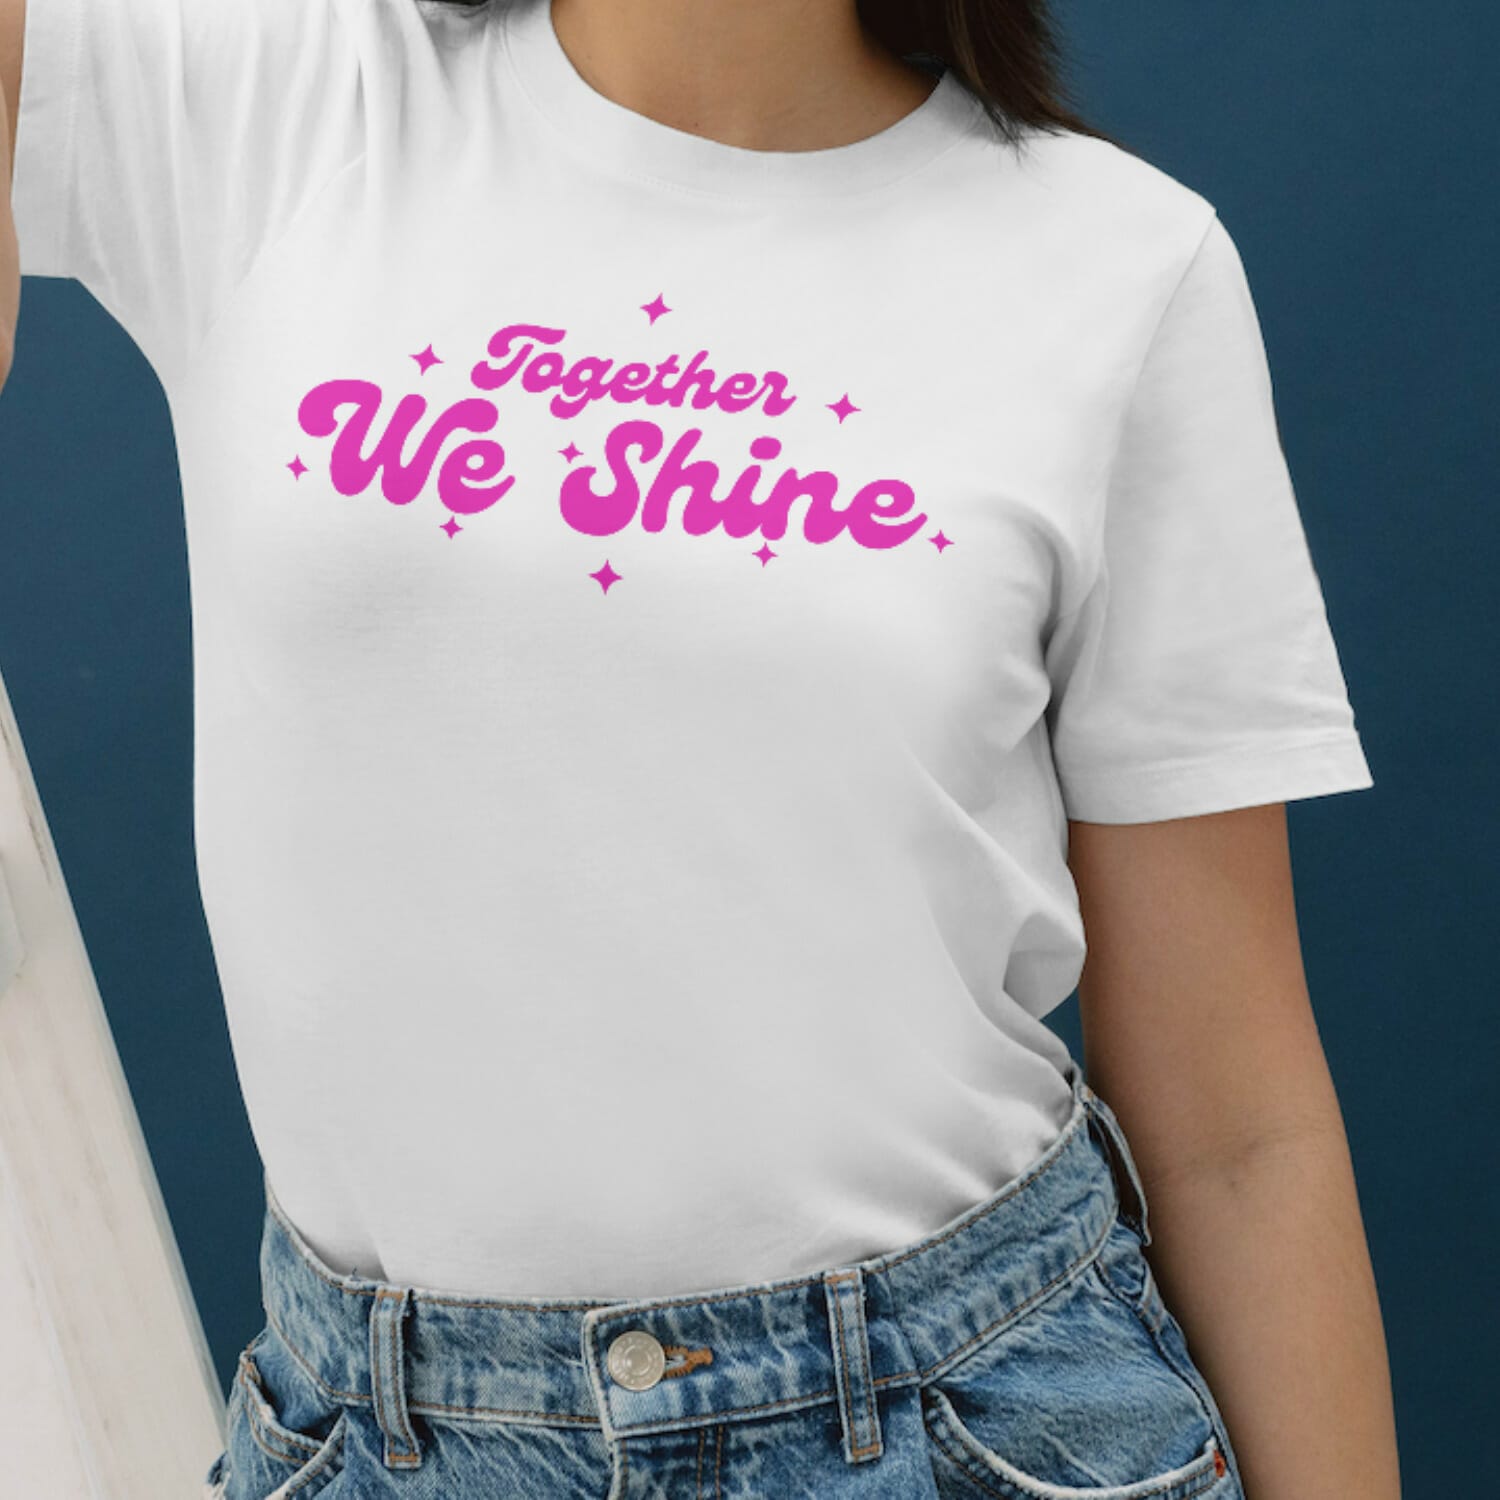 T Shirt Design For Free Together We Shine